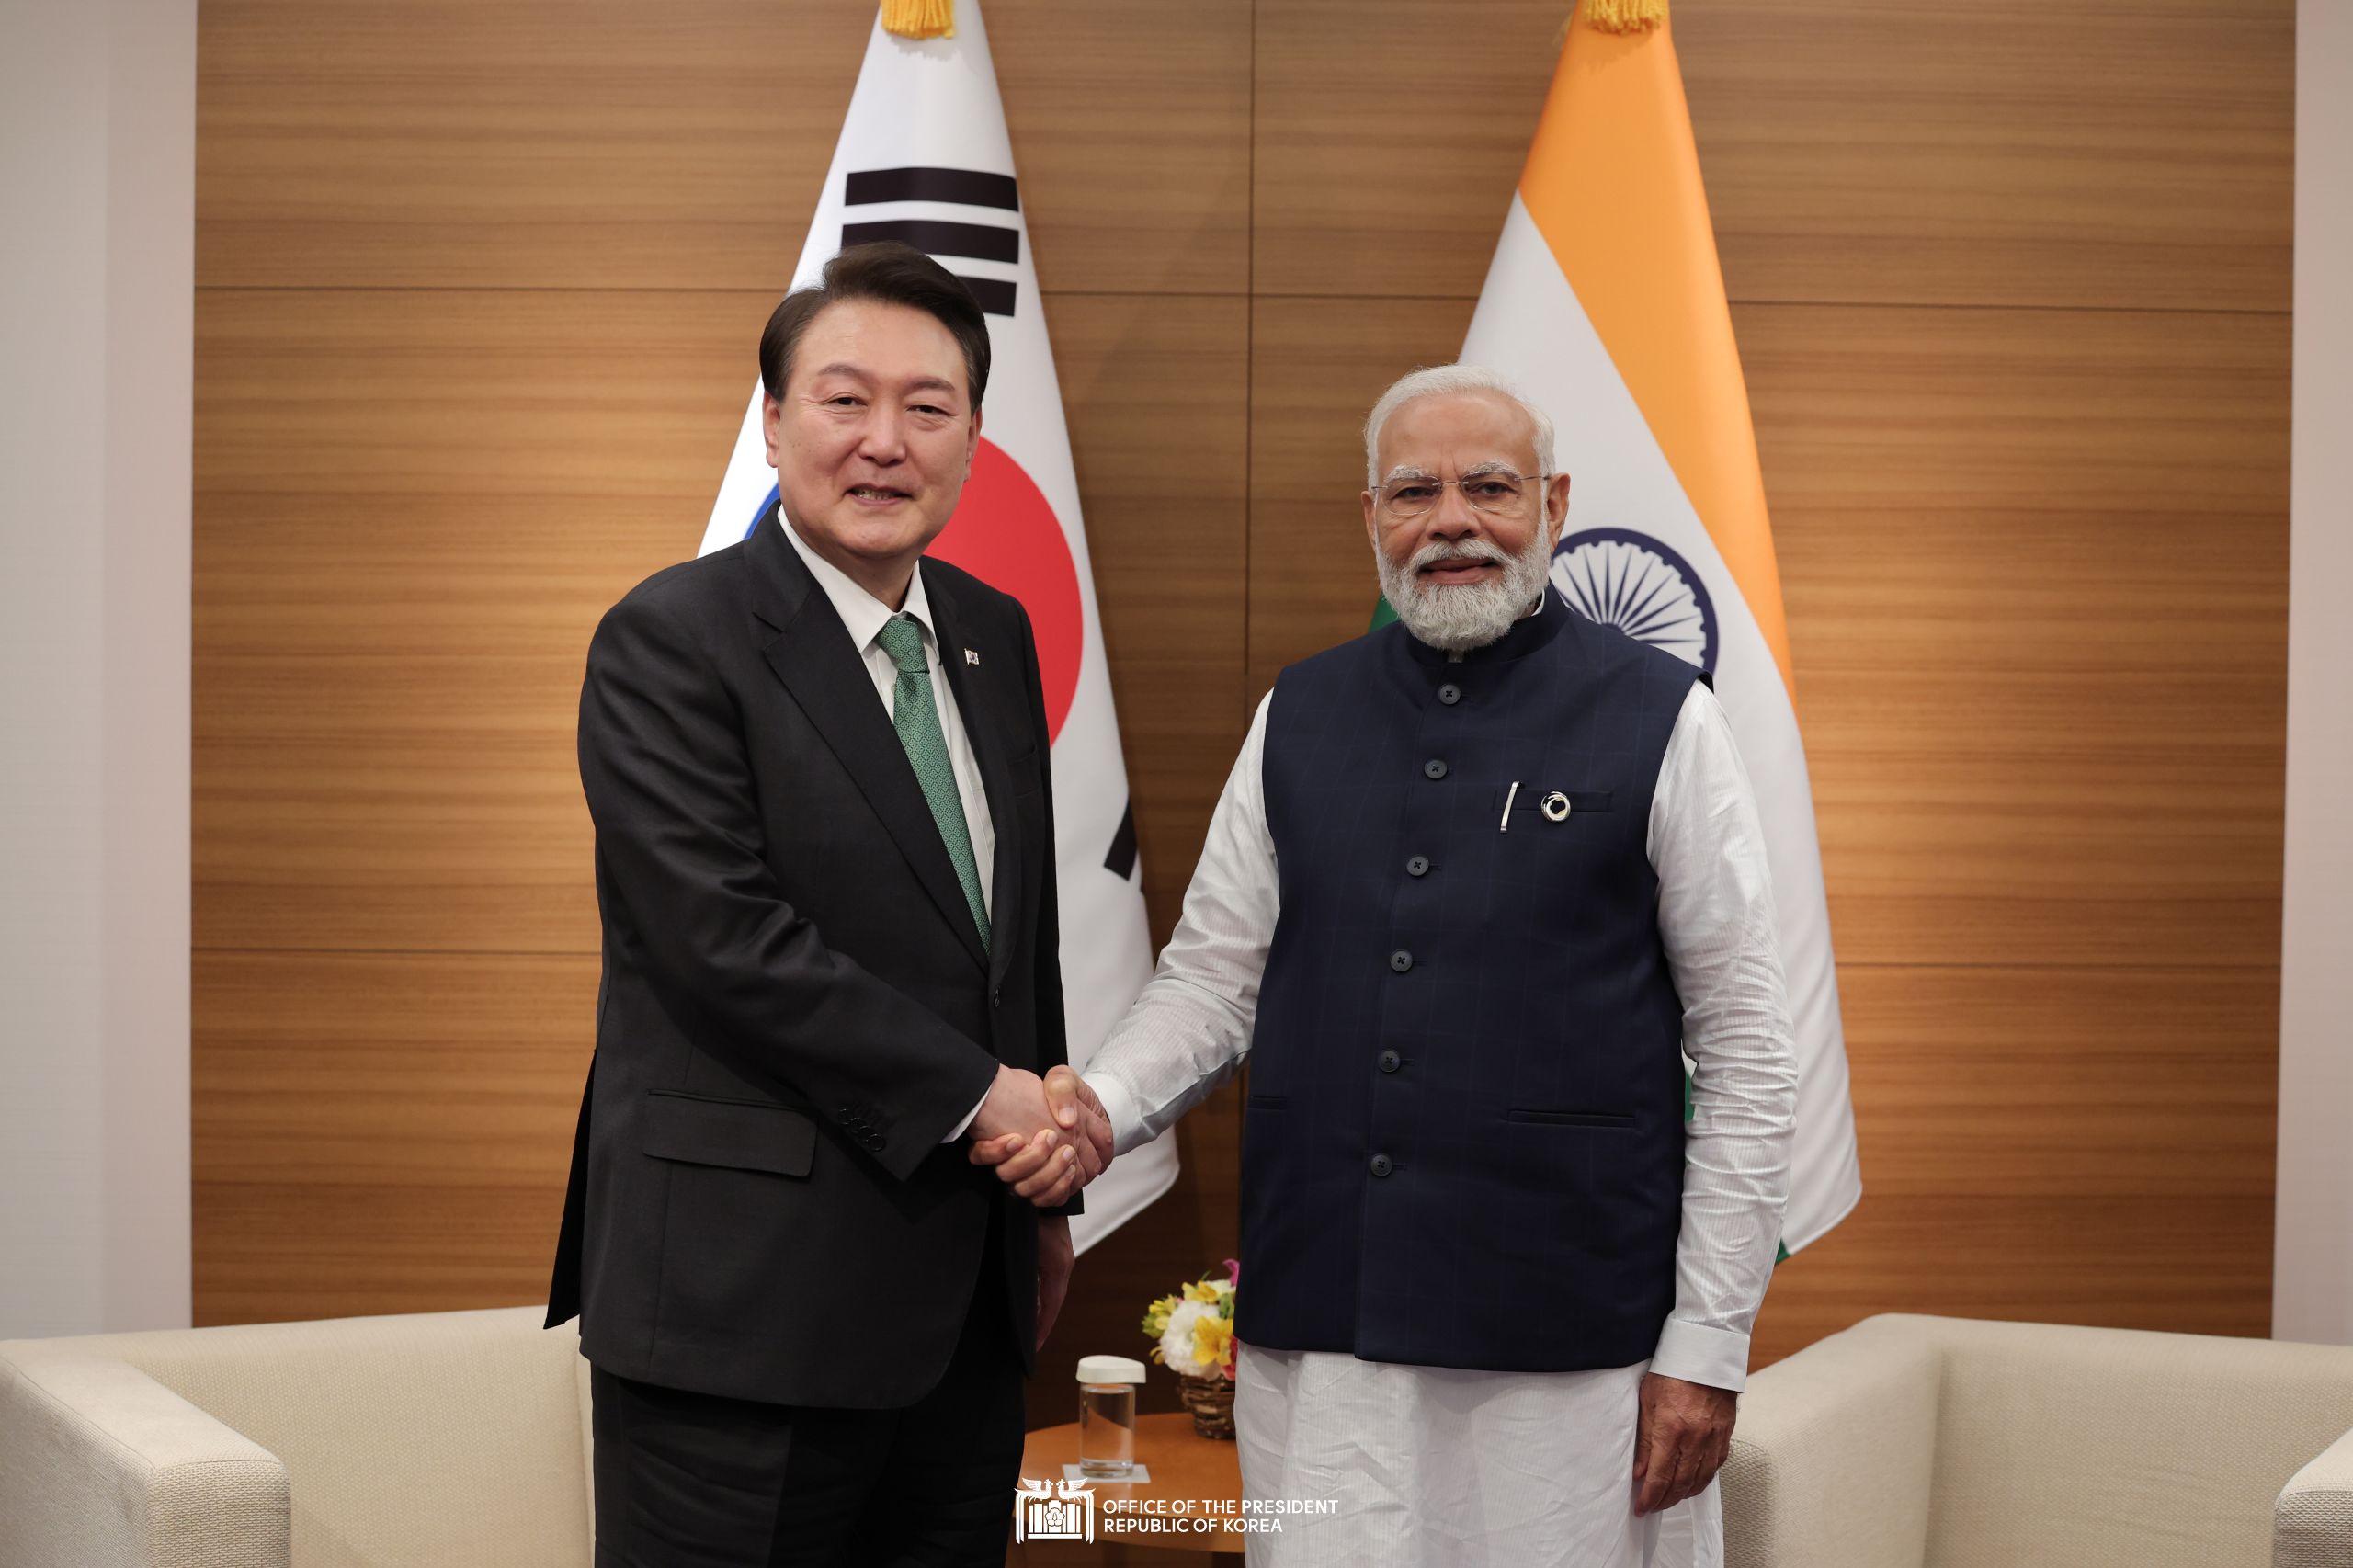 Korea-India Summit in Hiroshima, Japan slide 1